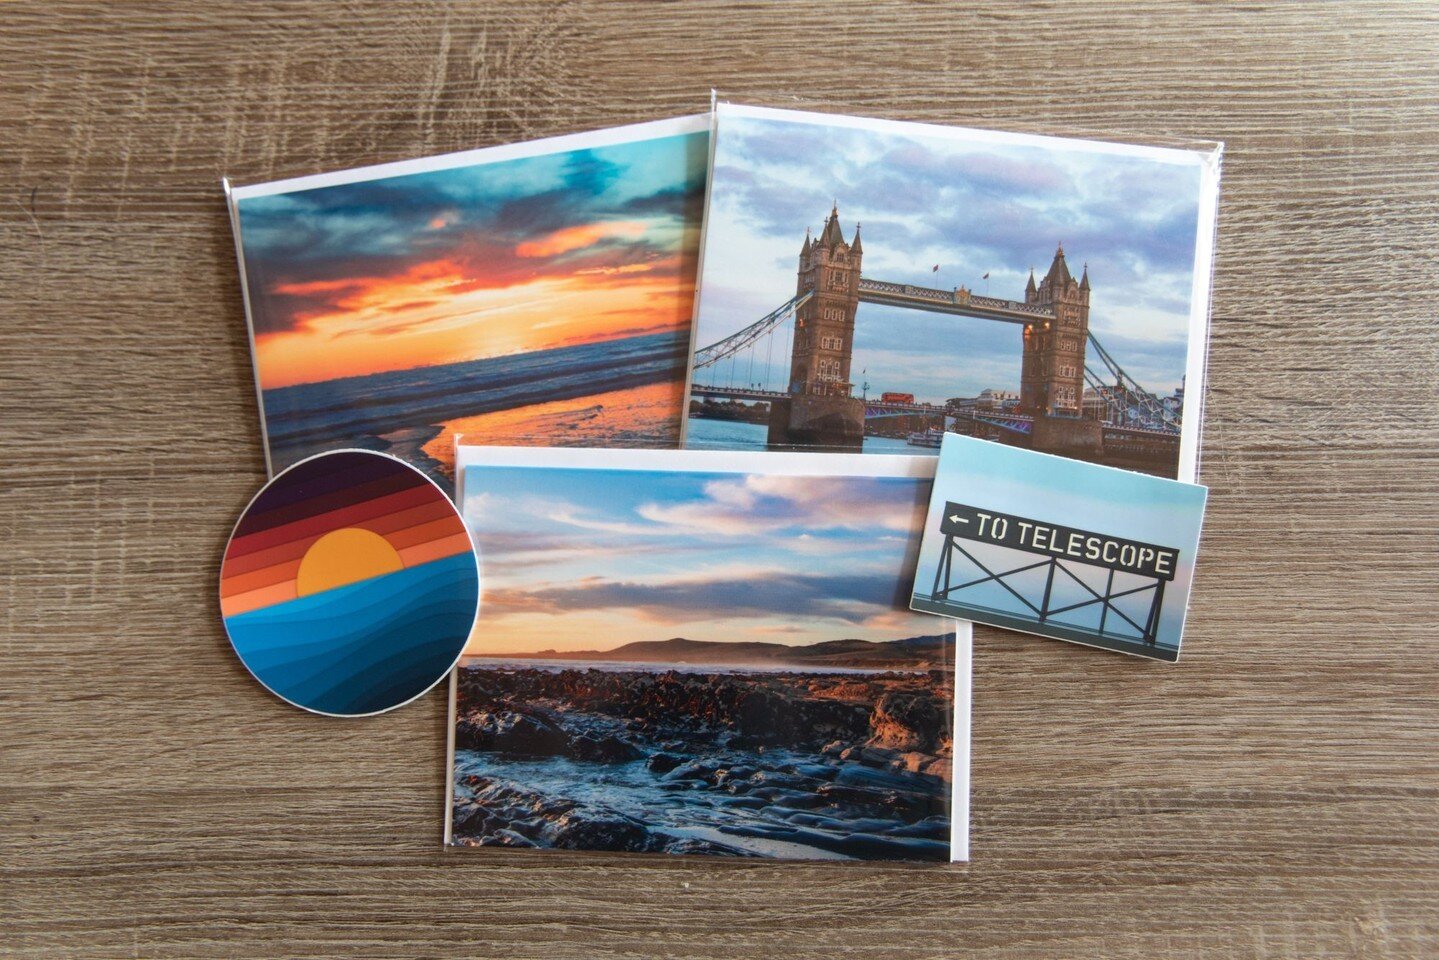 Just a few of my sunset items. Which is your favorite?

#stickershop #hydroflaskstickers #greetingcards #sunset #sunsets #sansimeon #sanluisobispo #california #towerbridge #london #england #griffithobservatory #la #losangeles #telescope